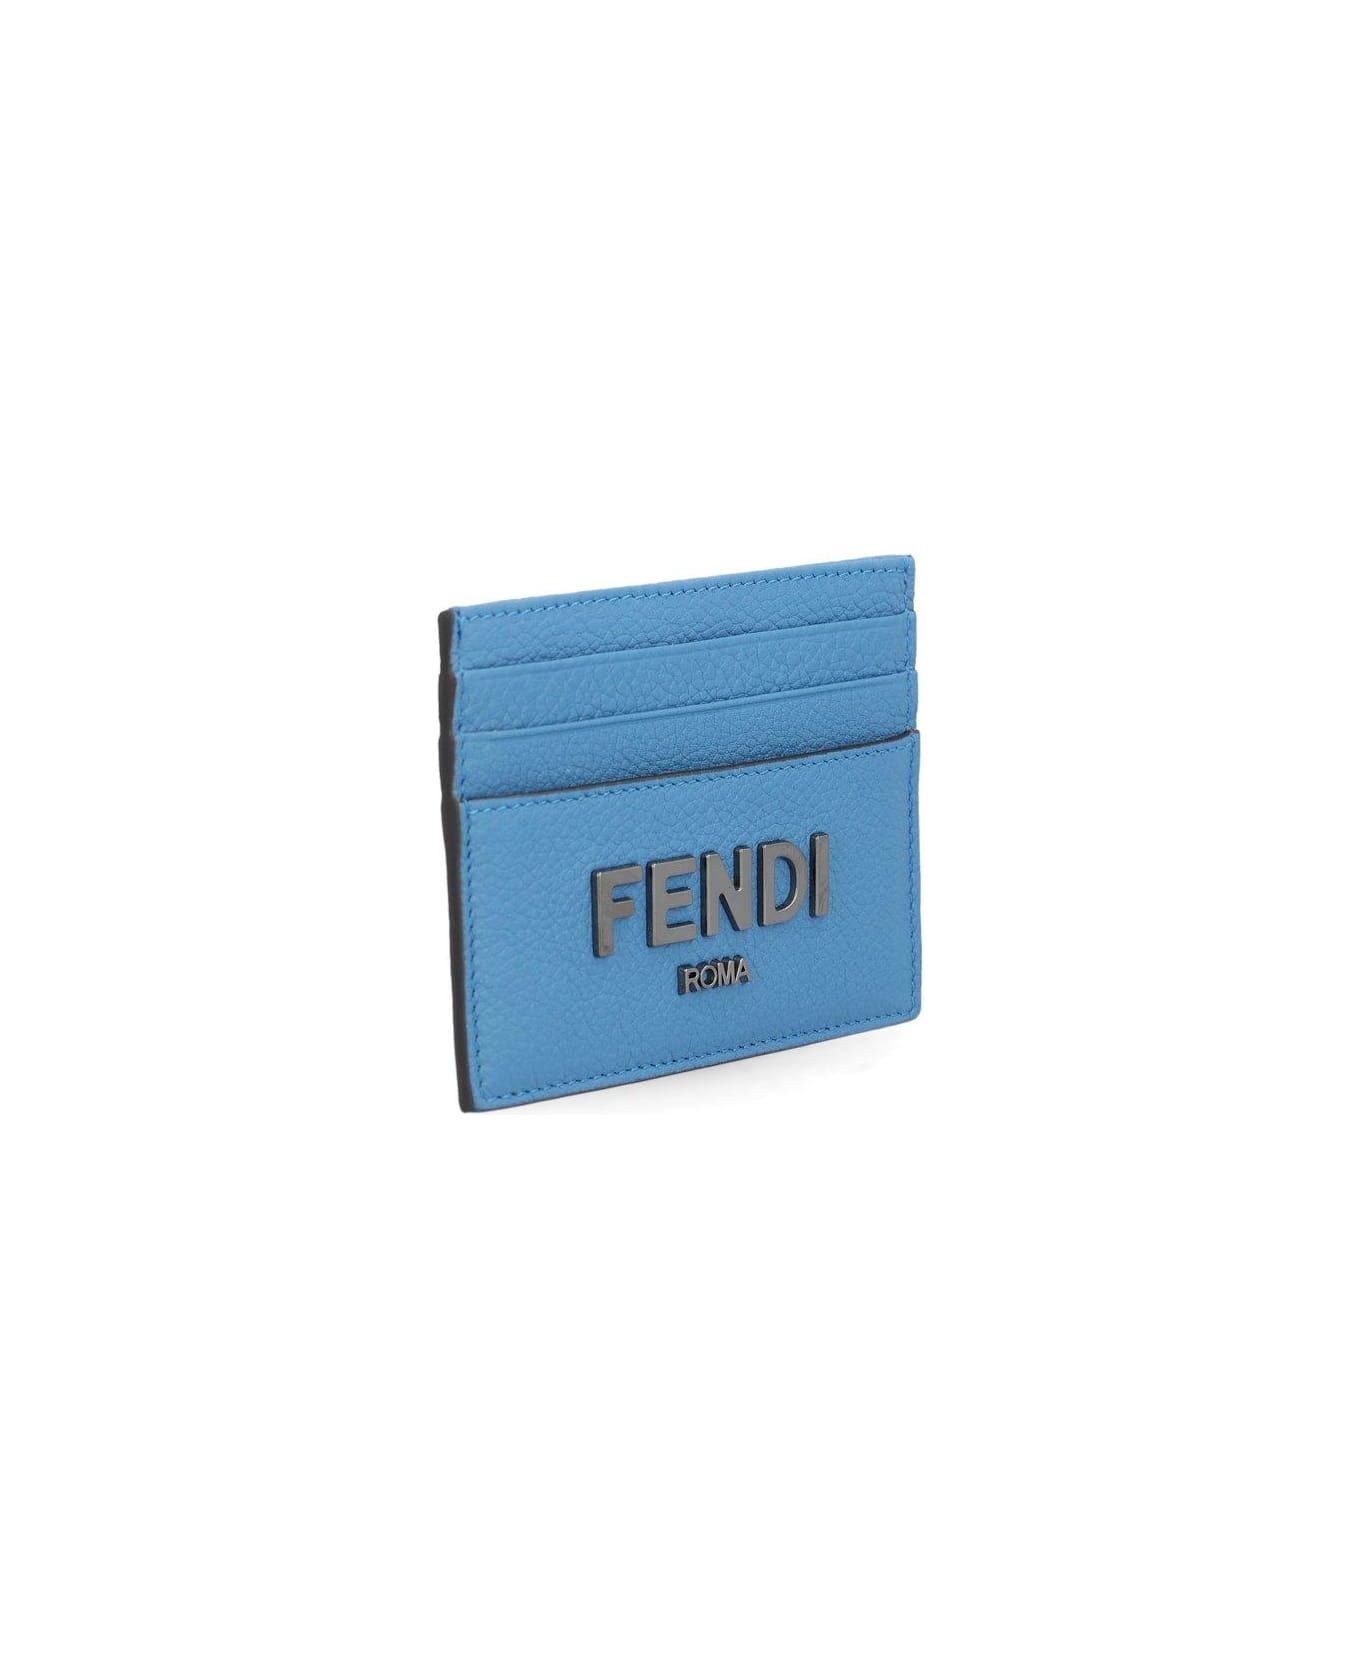 Fendi Signature Card Holder - Light blue